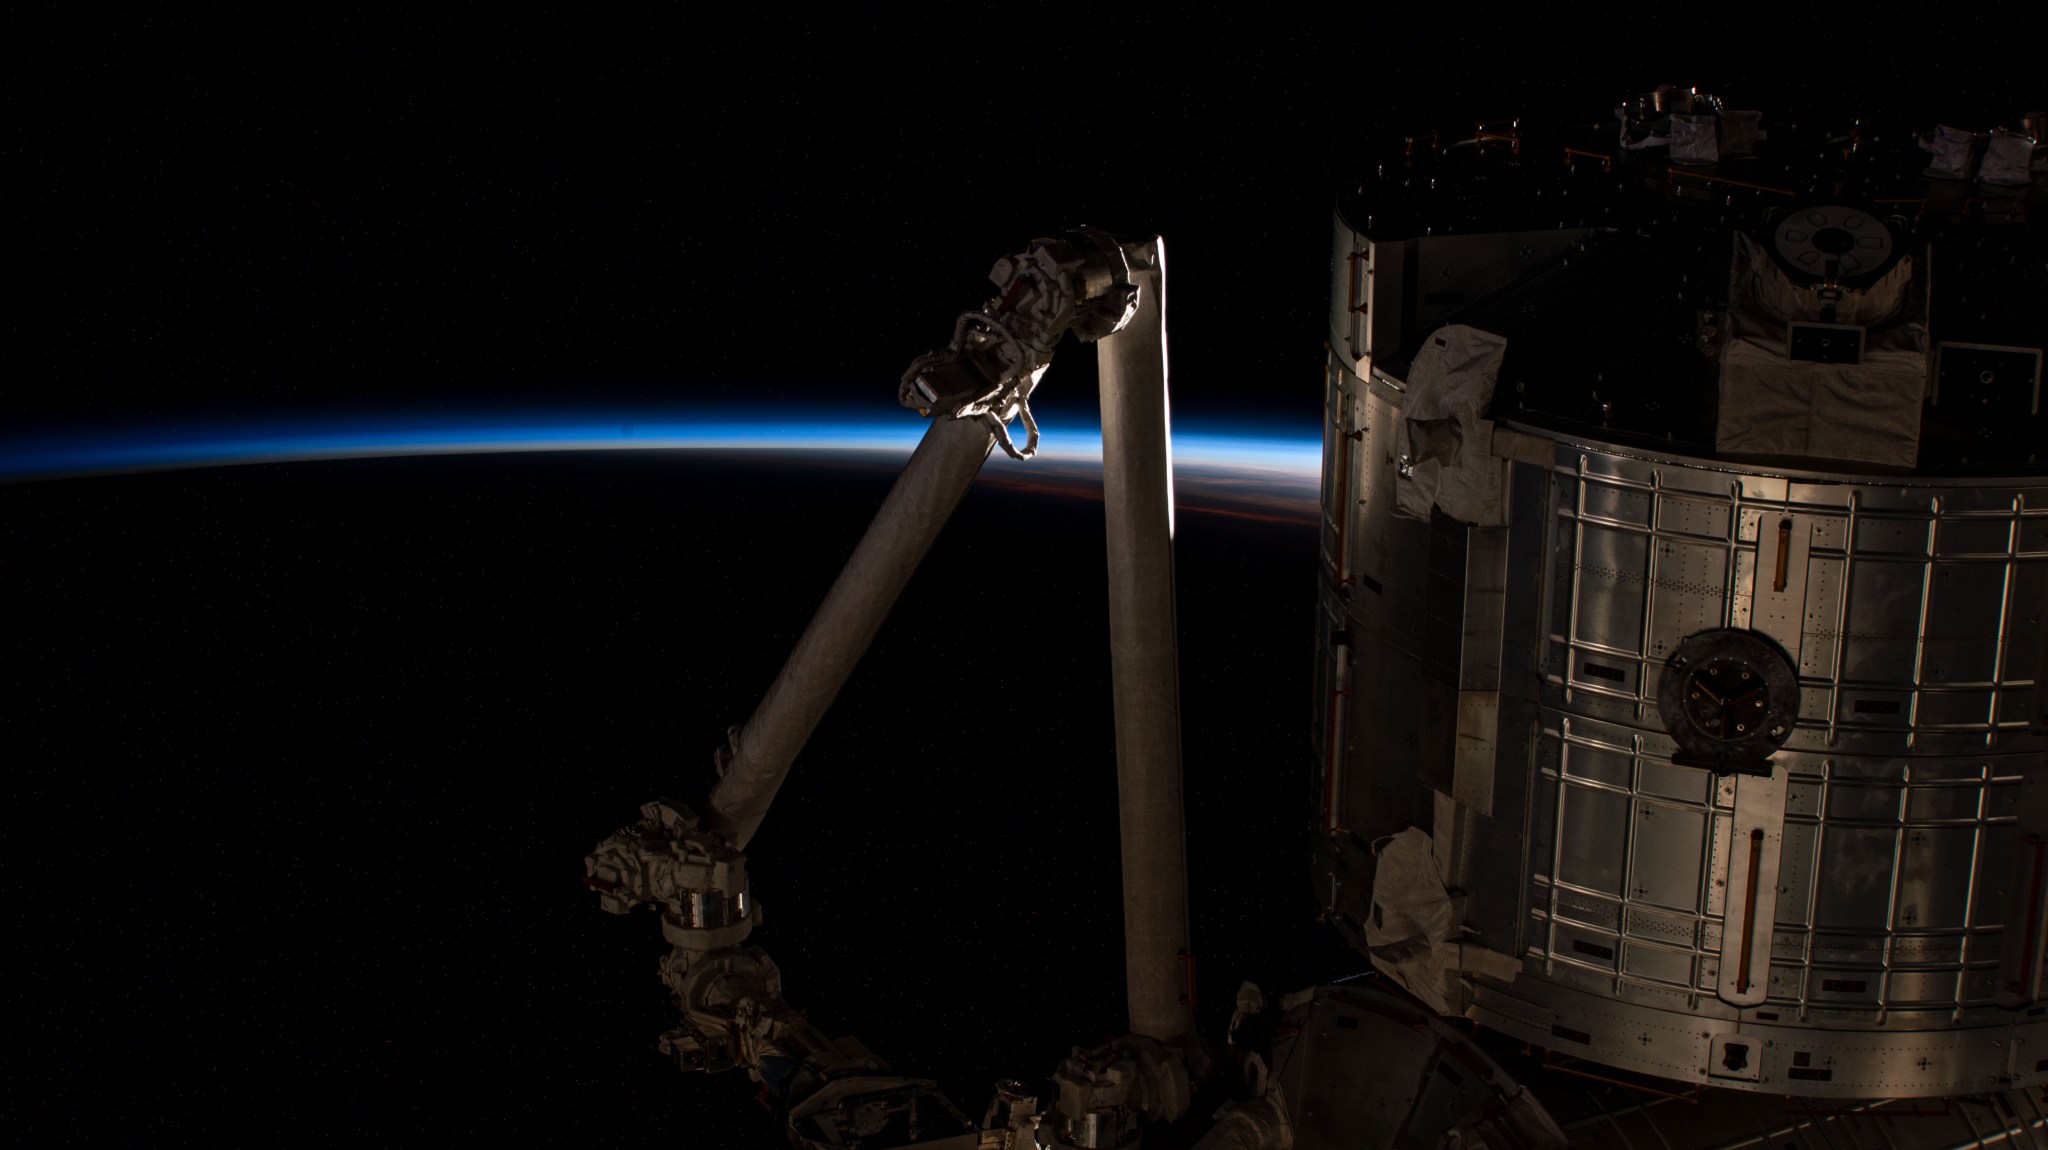 The International Space Station flies into an orbital sunrise